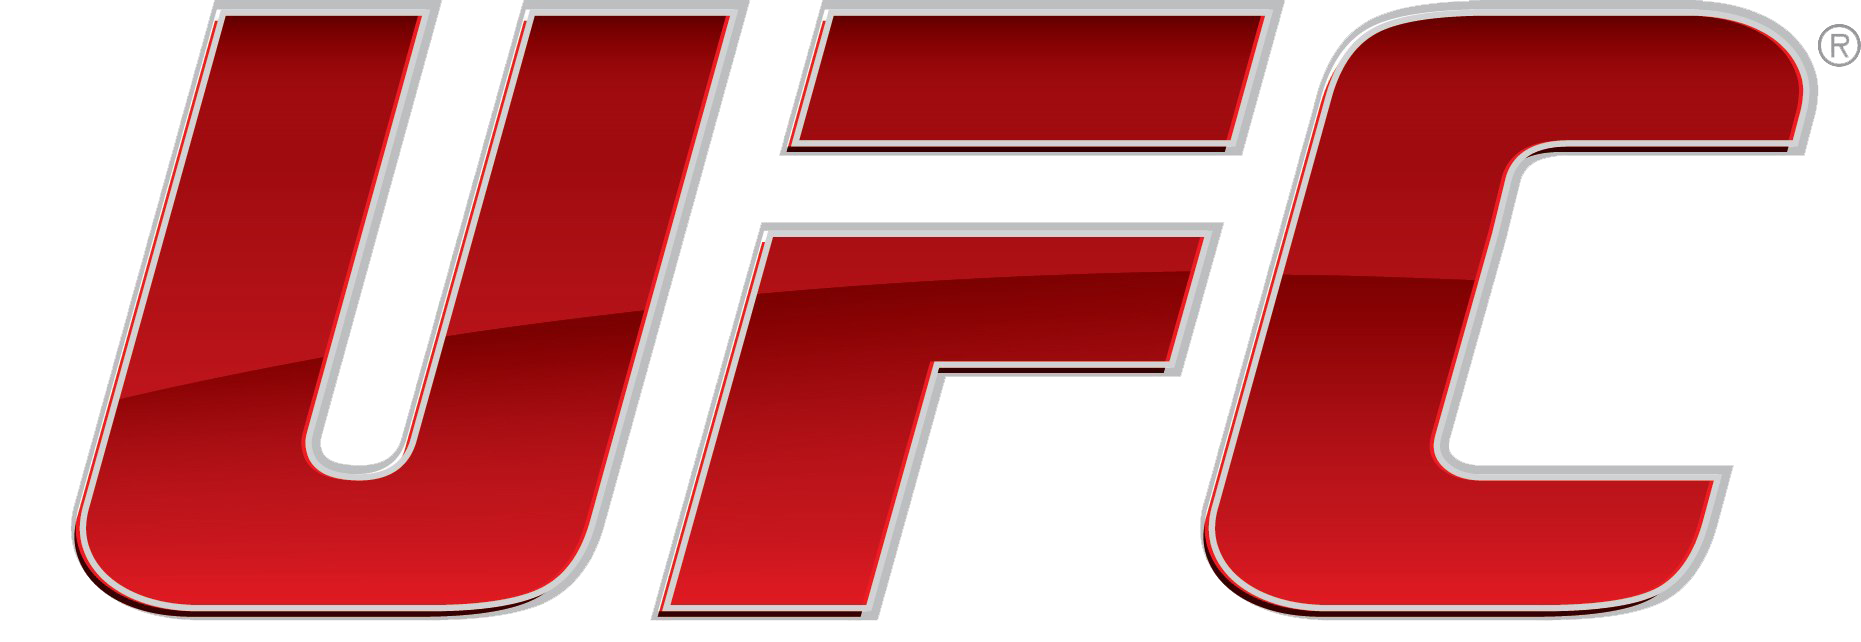 ufc logo PNG الخلفية